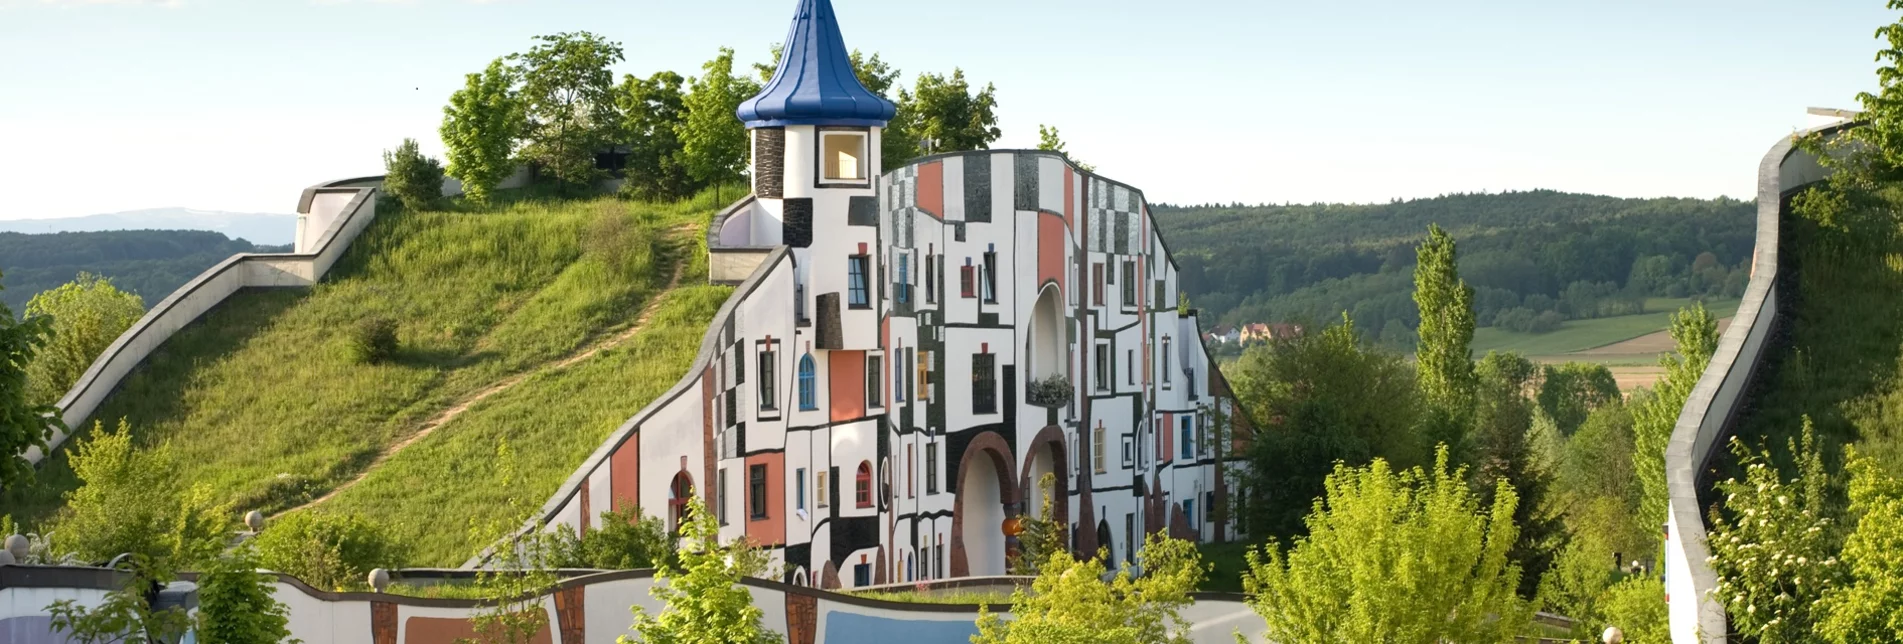 Bad Blumau - Impression #1 | © Rogner Bad Blumau, Hundertwasser Architekturprojekt